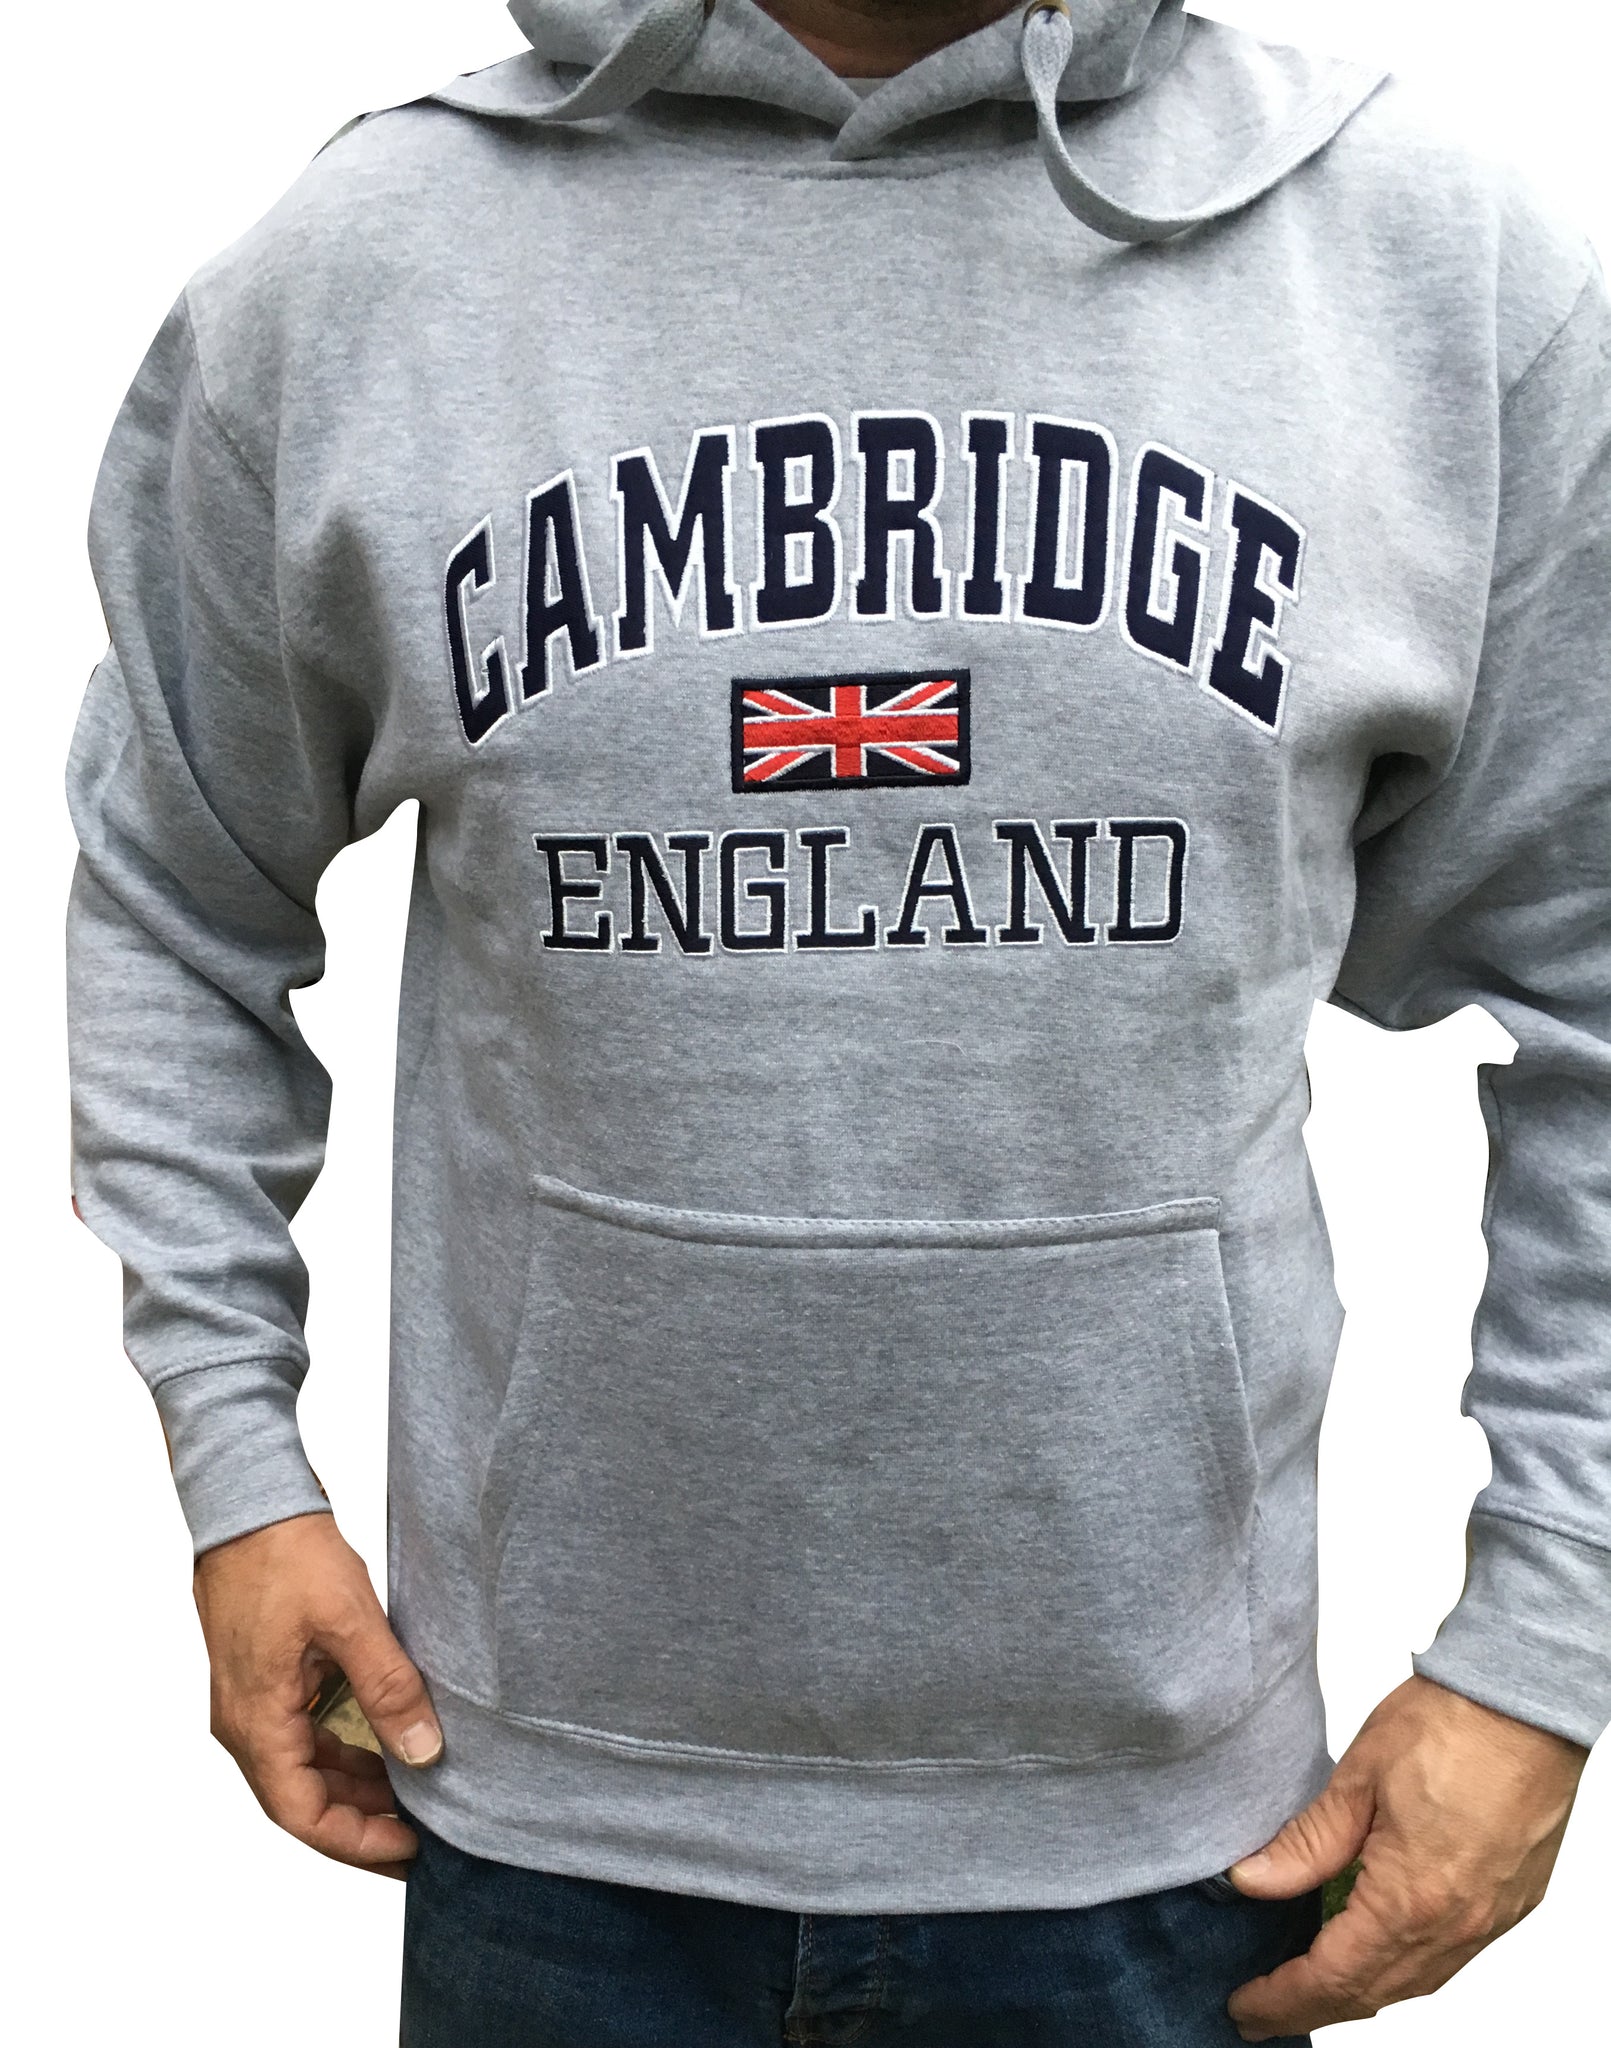 Cambridge England Hoody - Hoody w from the Famous City of Cambridge